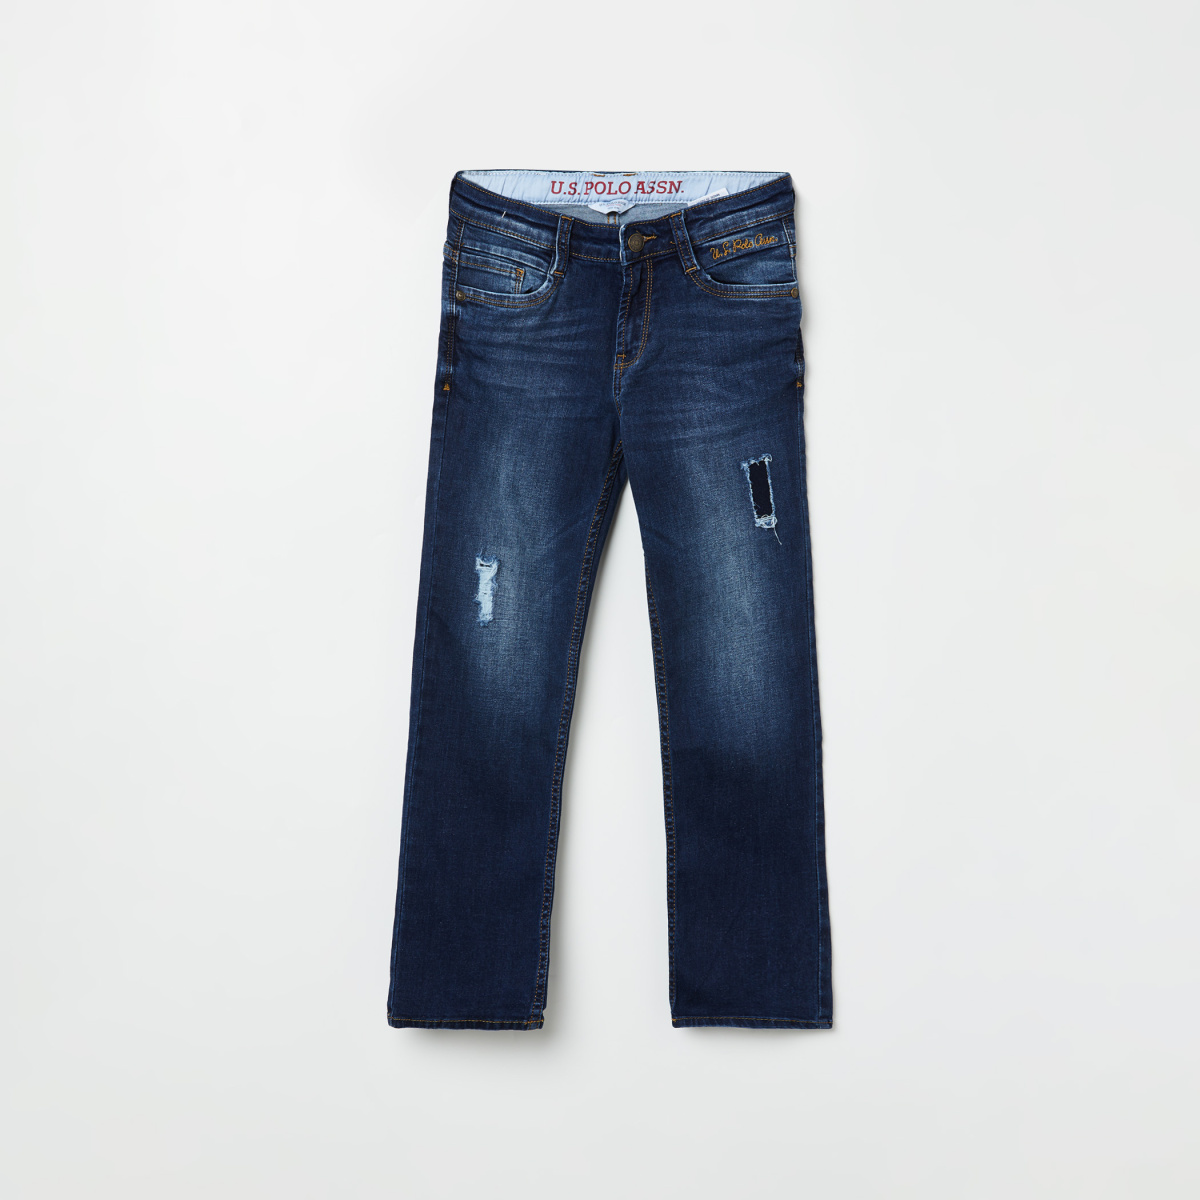 U.S. POLO ASSN KIDS Boys Stonewashed Slim Fit Jeans